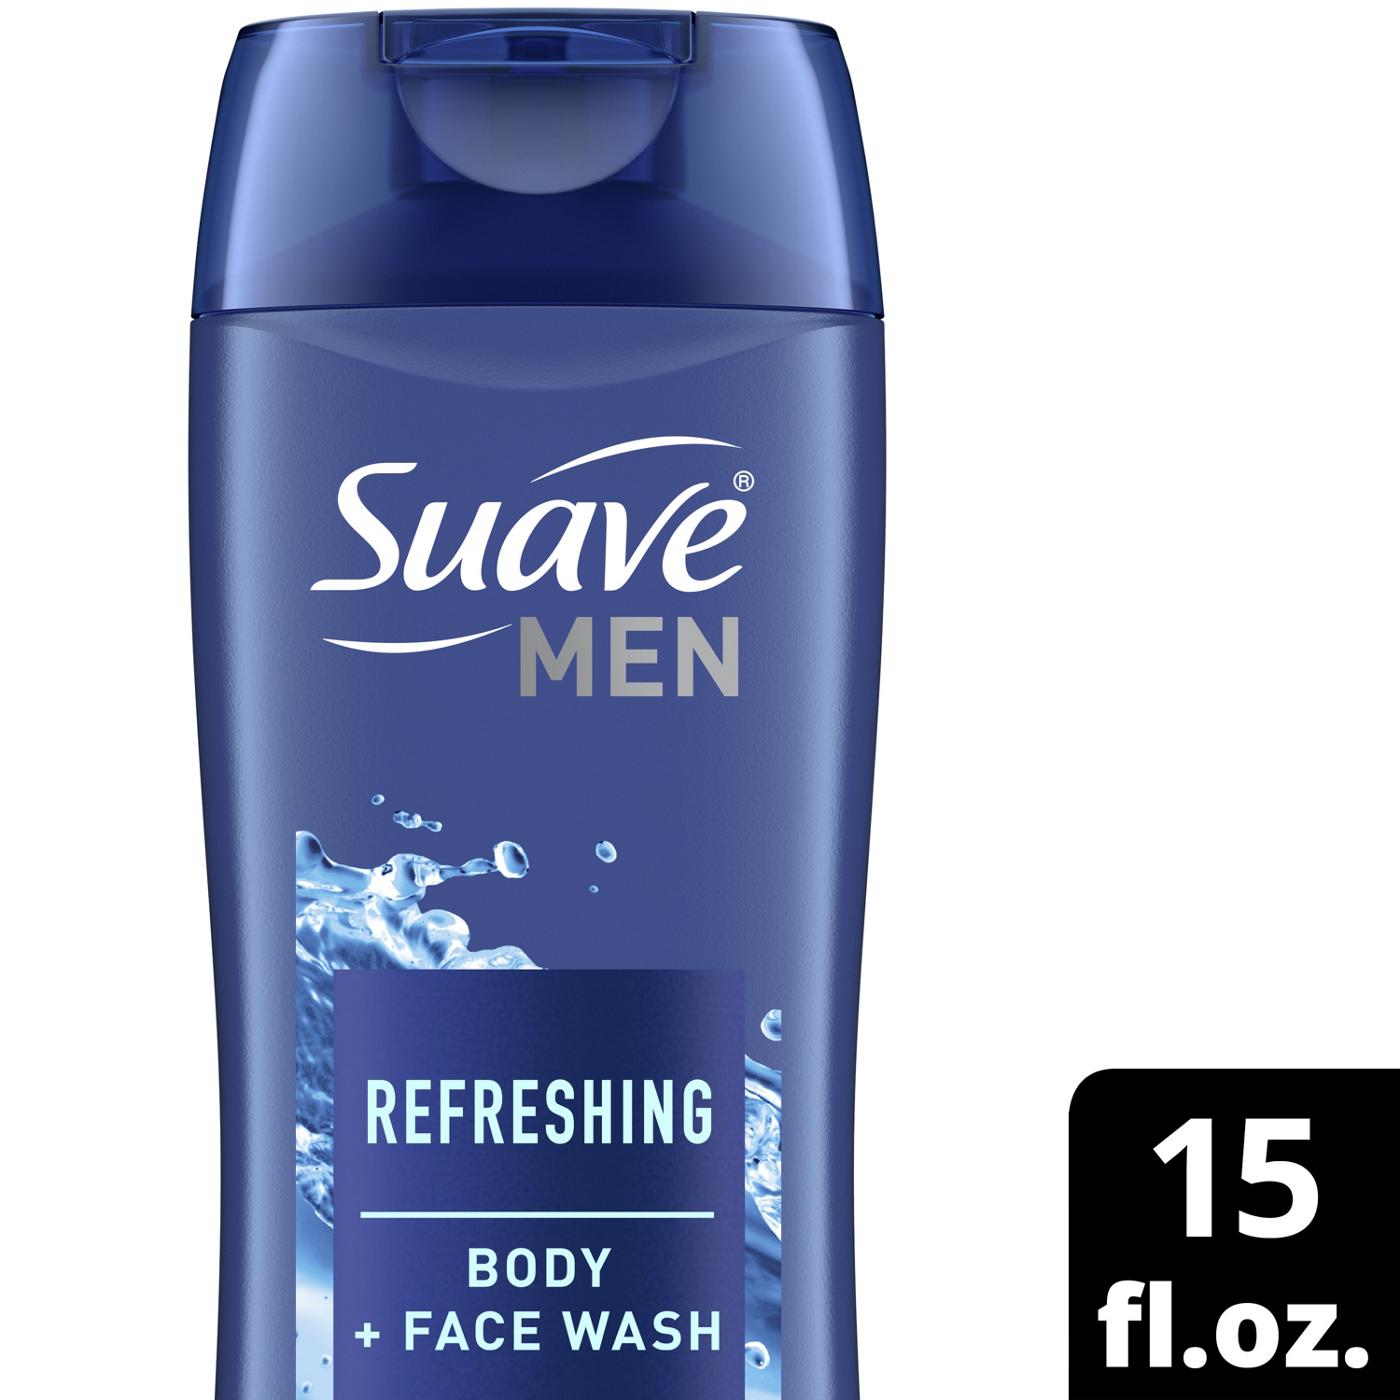 Suave Men Refresh Body Wash; image 2 of 3